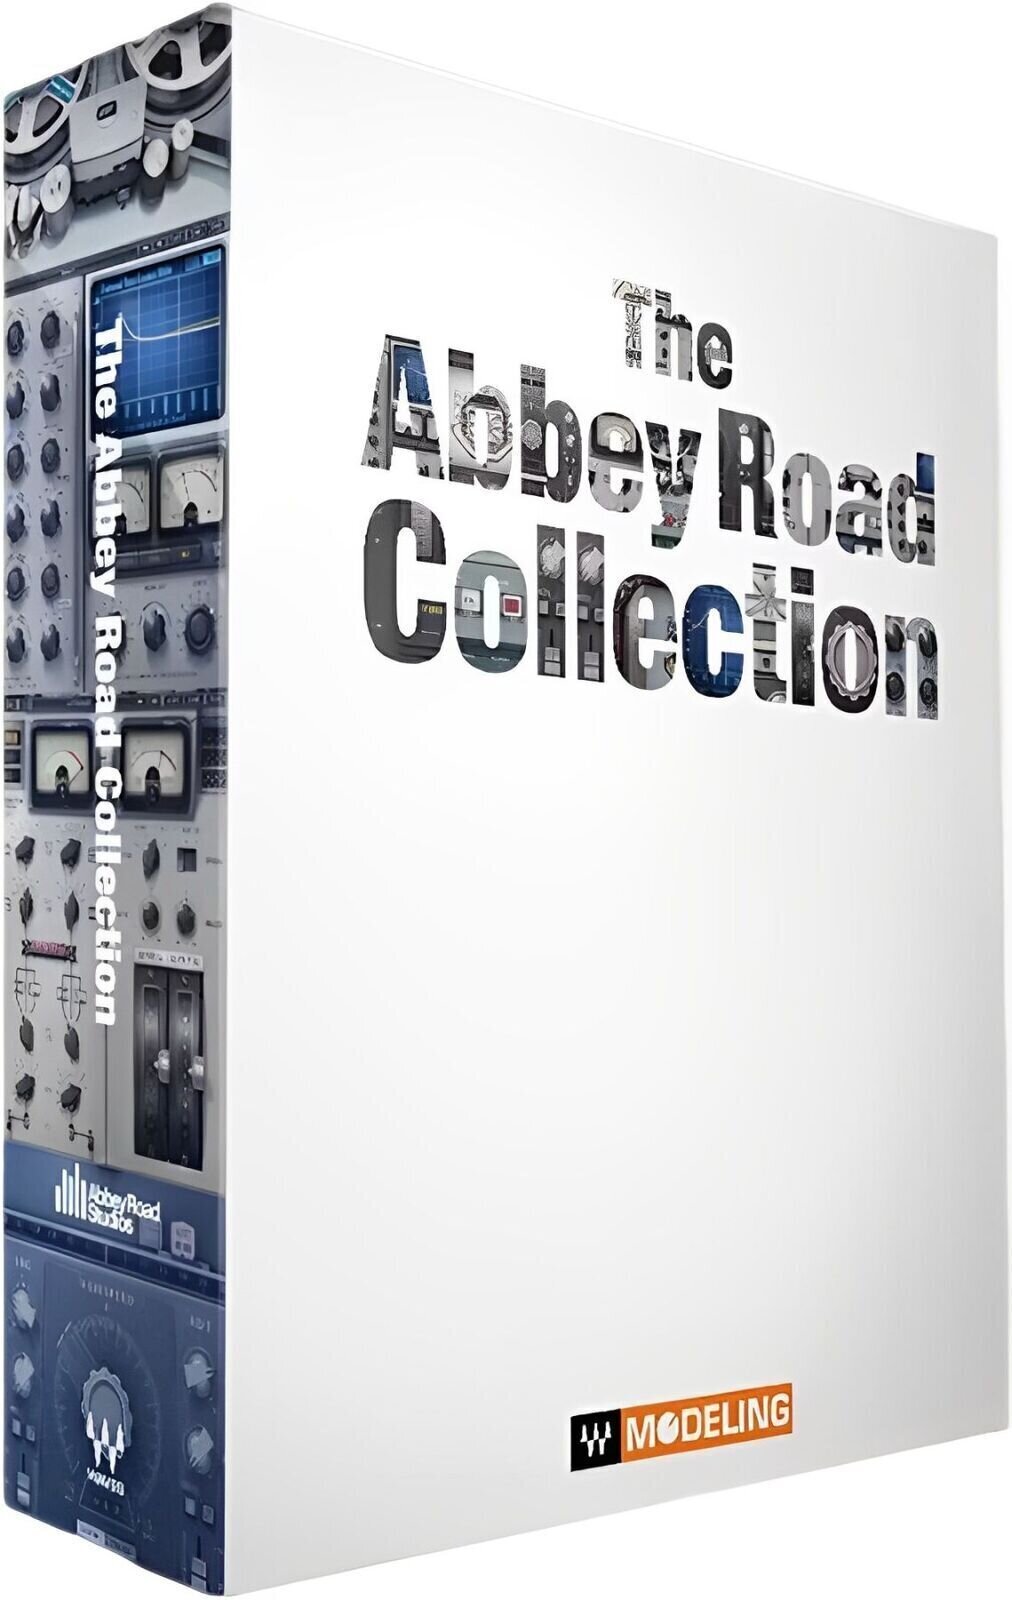 Softverski plug-in FX procesor Waves Abbey Road Collection (Digitalni proizvod)